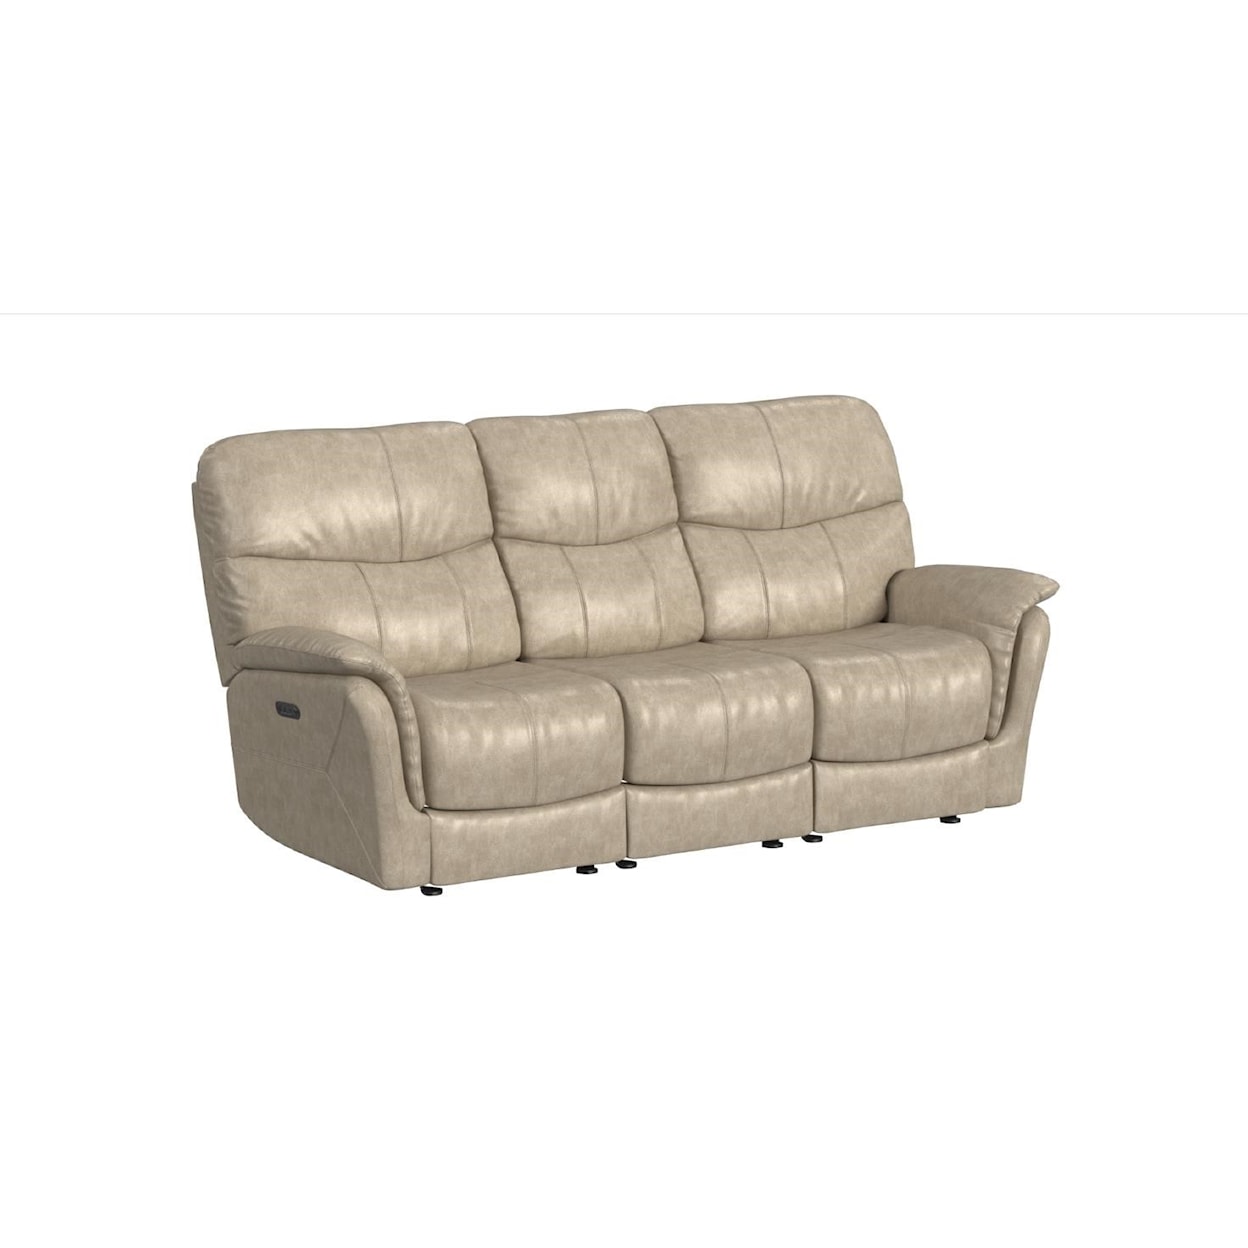 Bassett Club Level - Cary 3 Seat Reclining Sofa